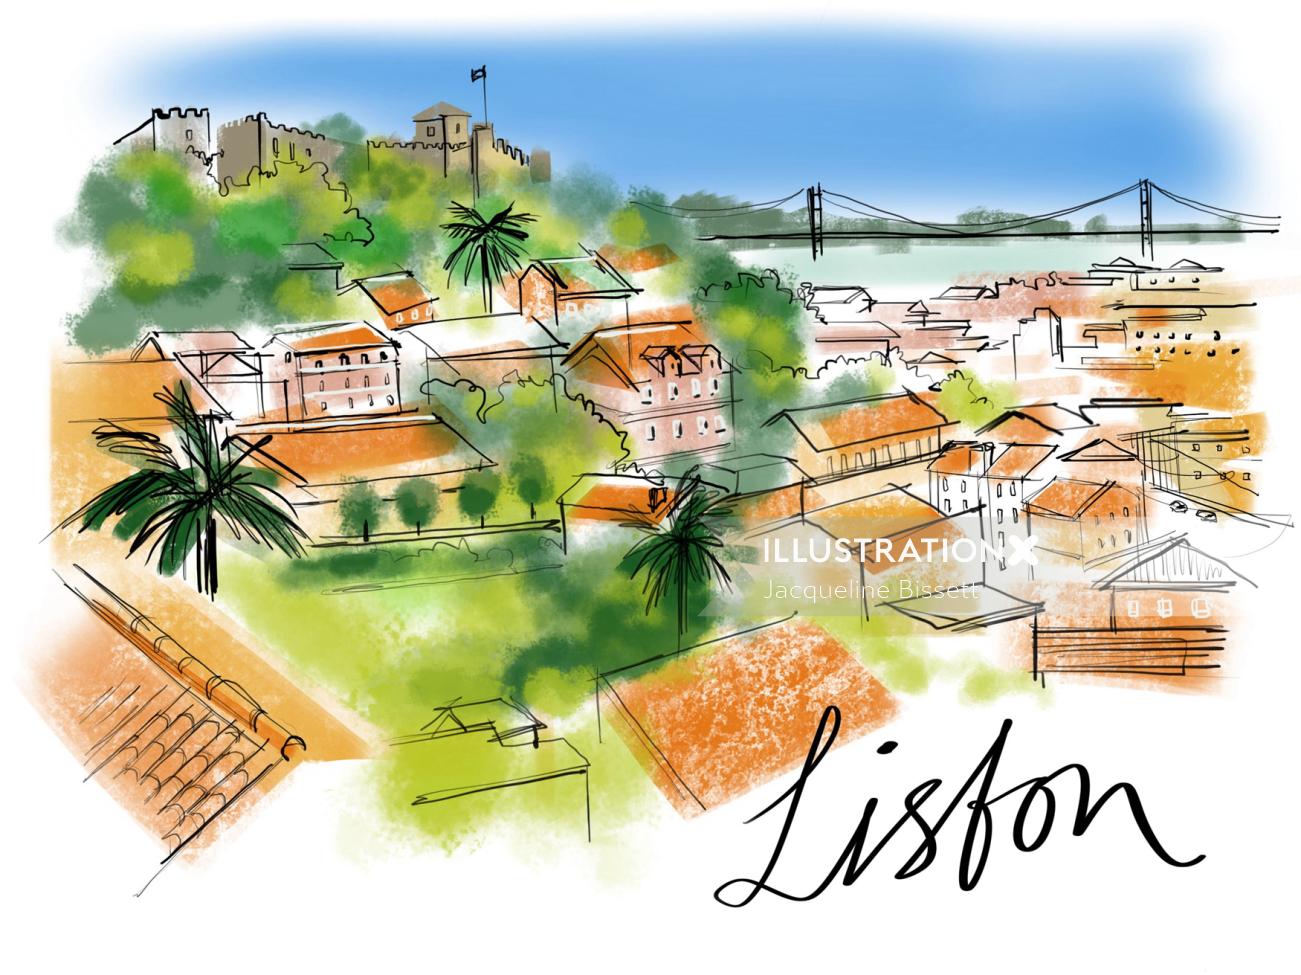 Lisfon city drawing
